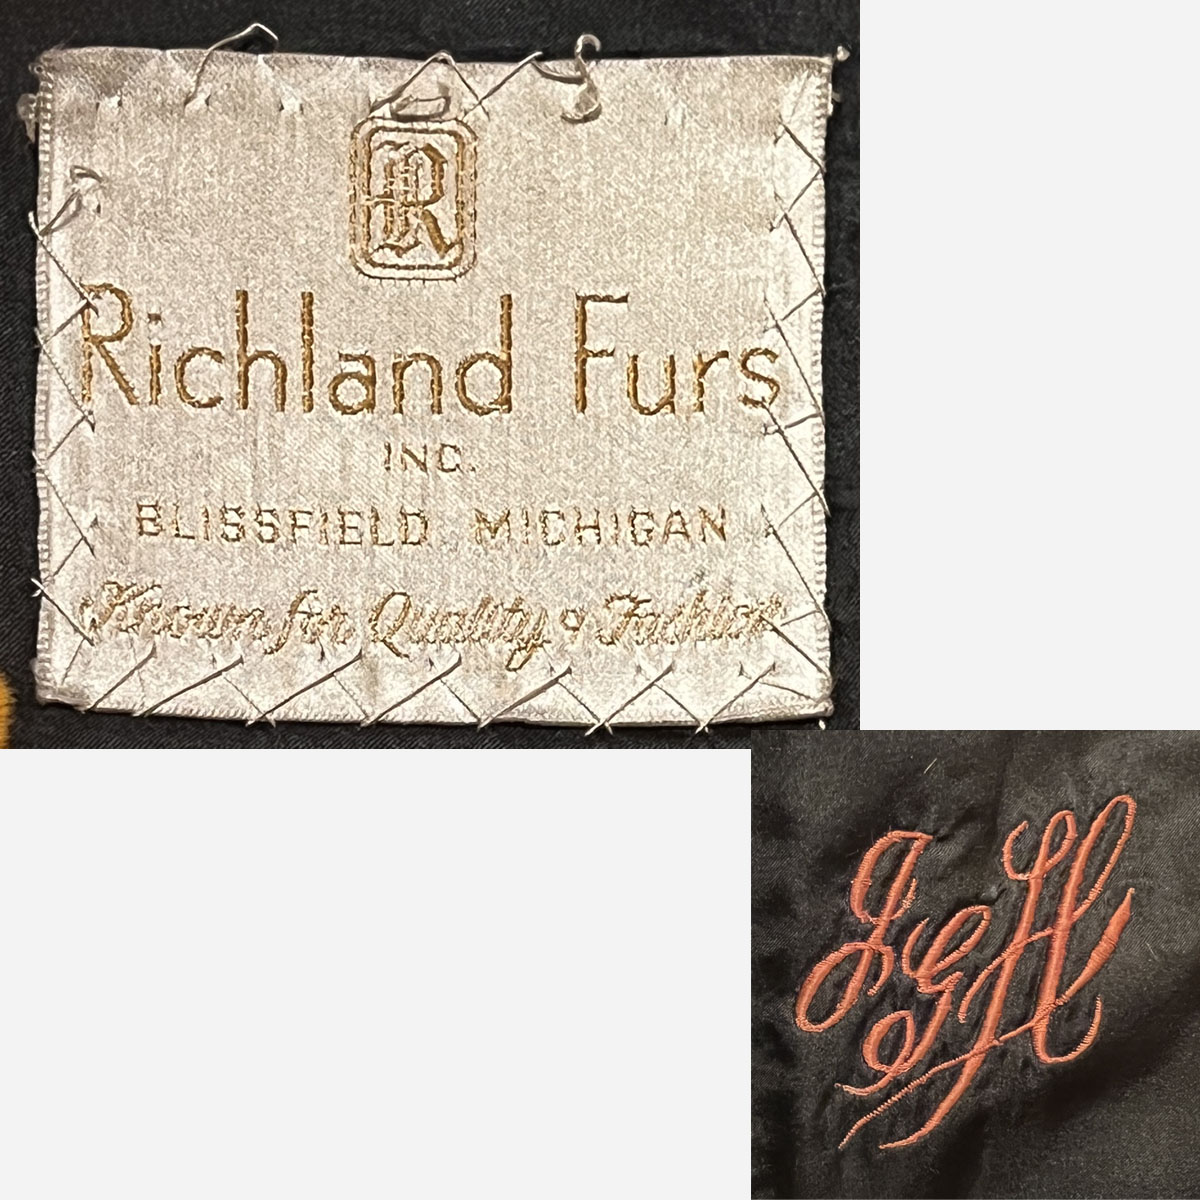 Richland Furs label Blissfield Michigan